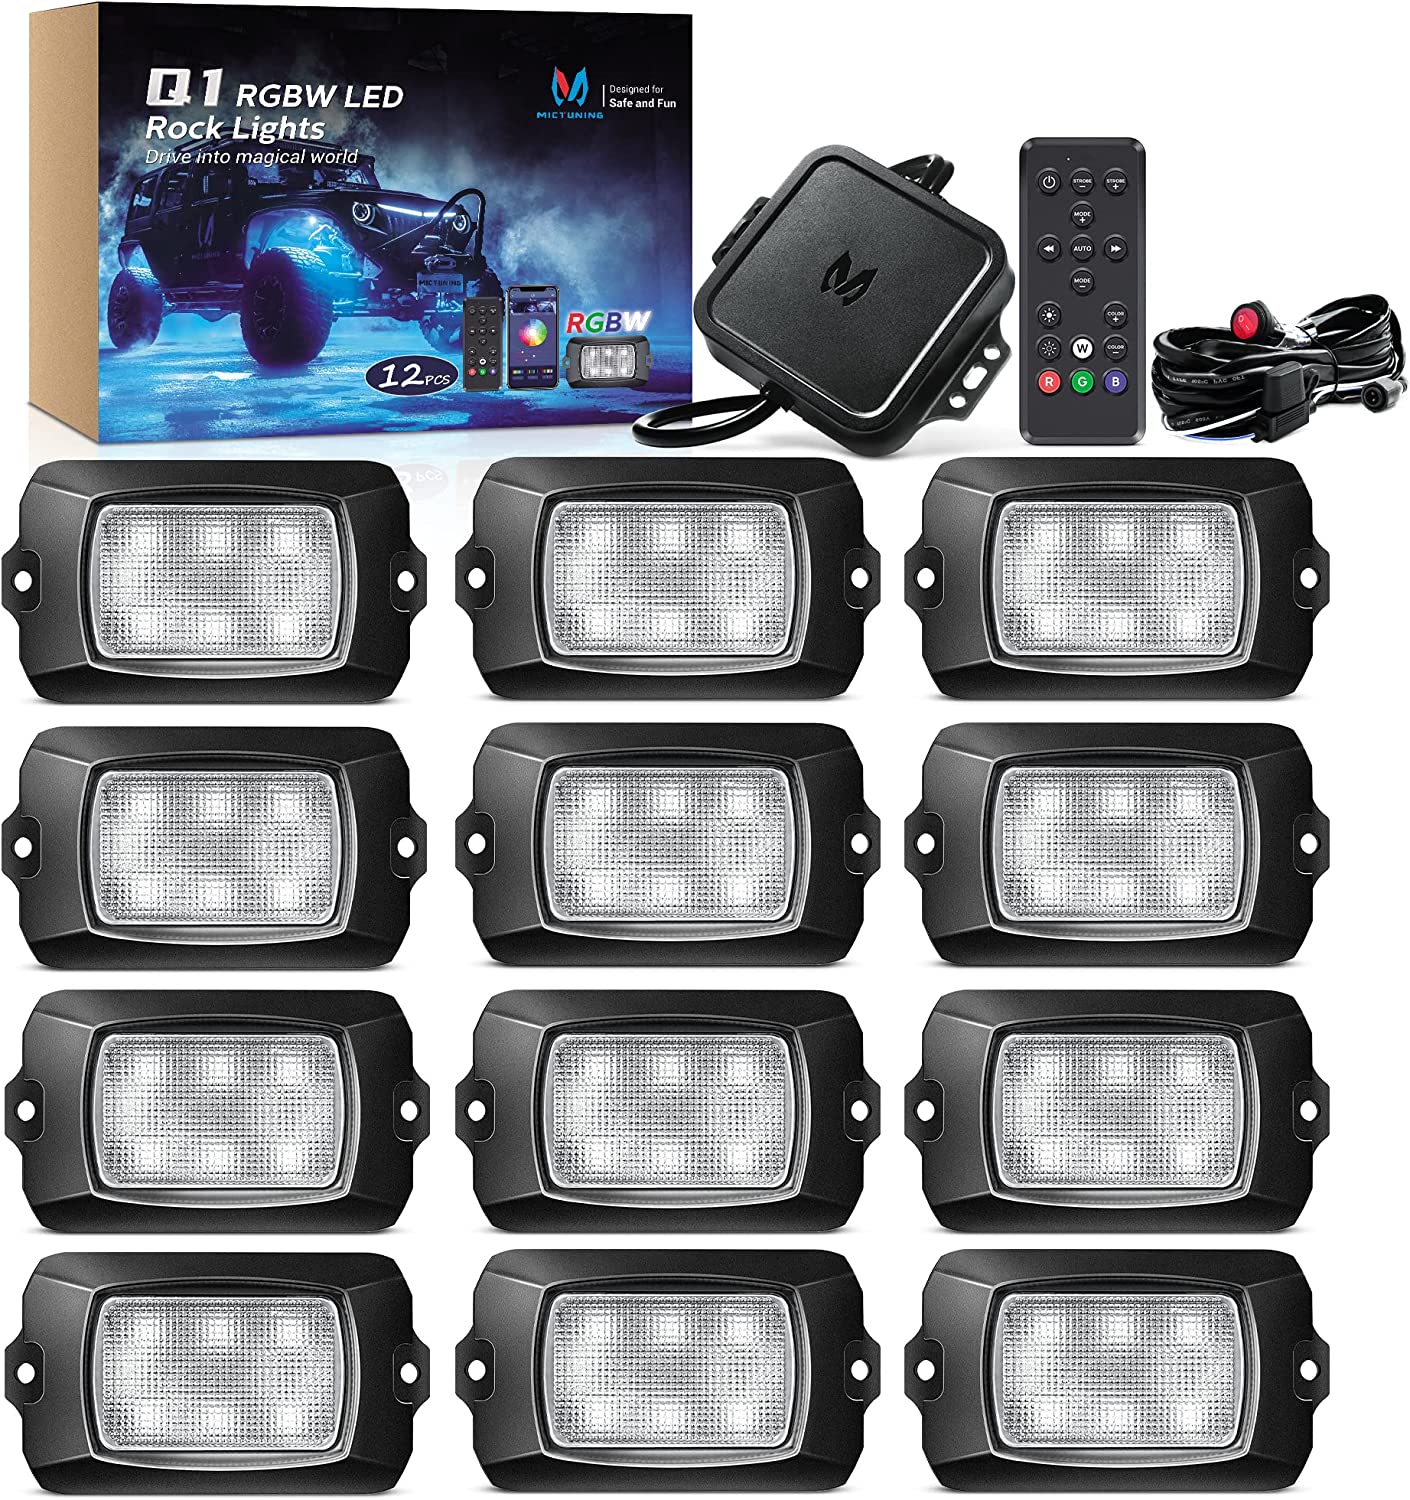 Q1 RGBW LED Rock Lights - 12 Pods  Neon LED Light Kit